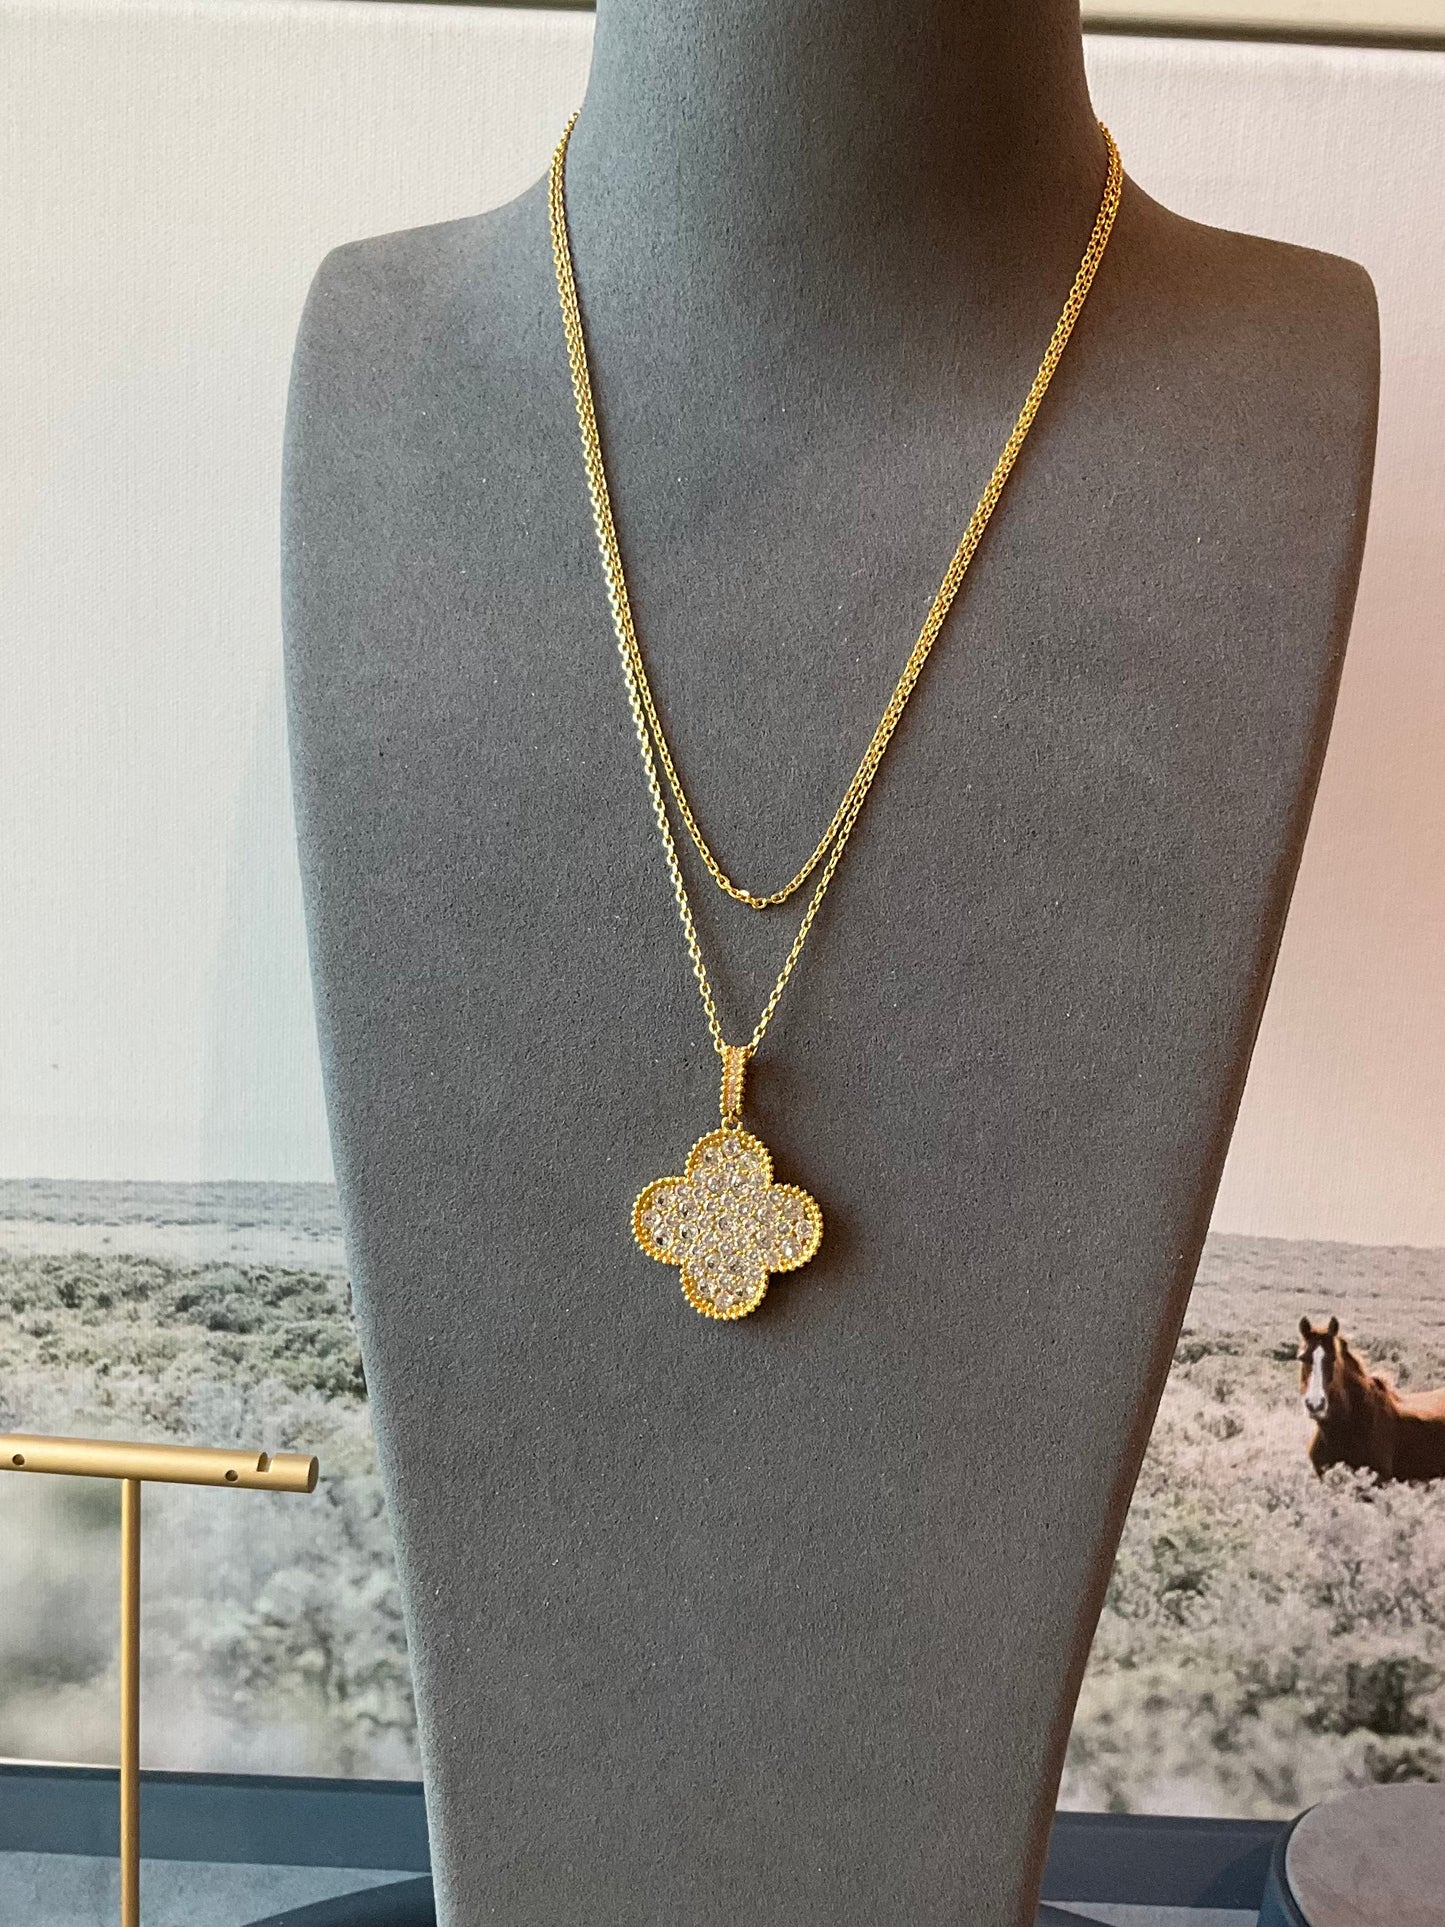 25mm cz clover necklace 925 silver 18k gold plated 88cm long - ParadiseKissCo